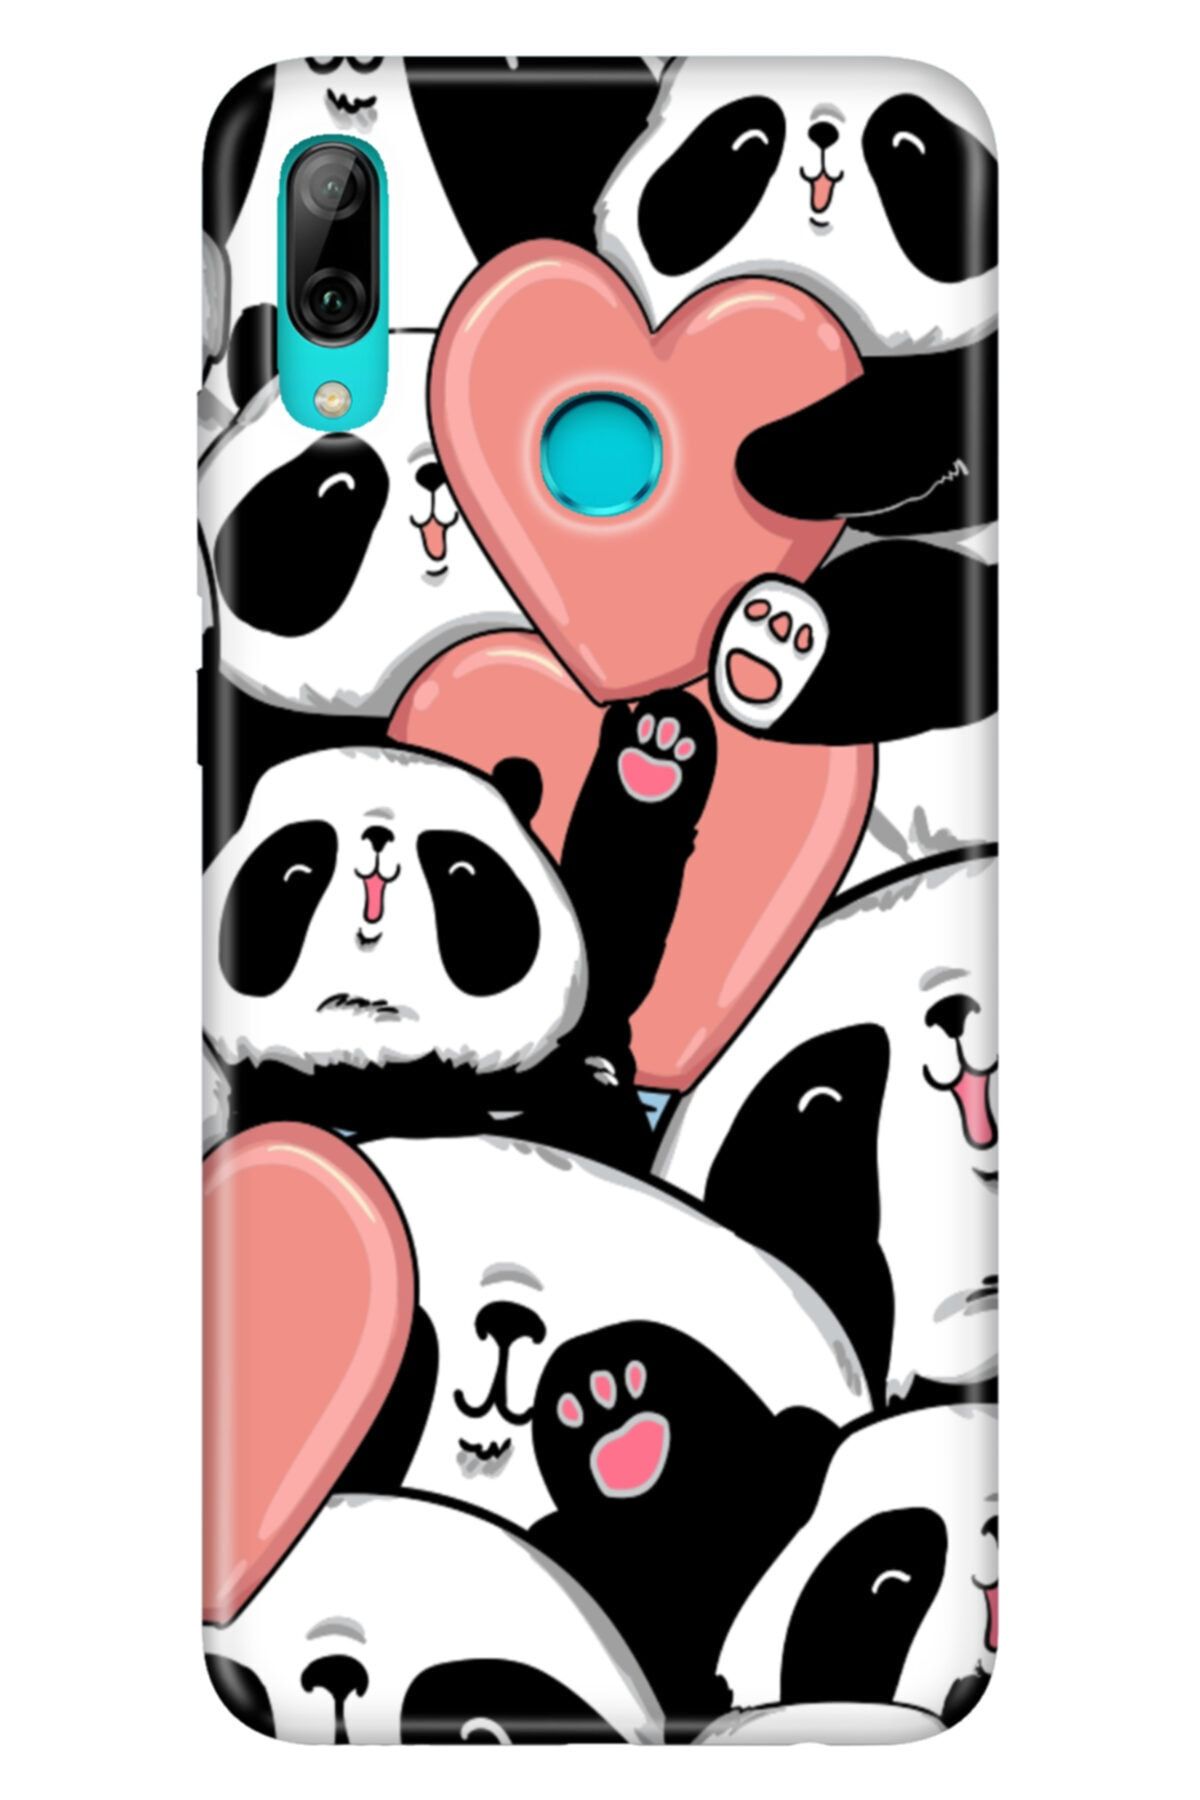 Cekuonline P Smart 2019 Kılıf Colored Desenli Silikon Sevimli Panda